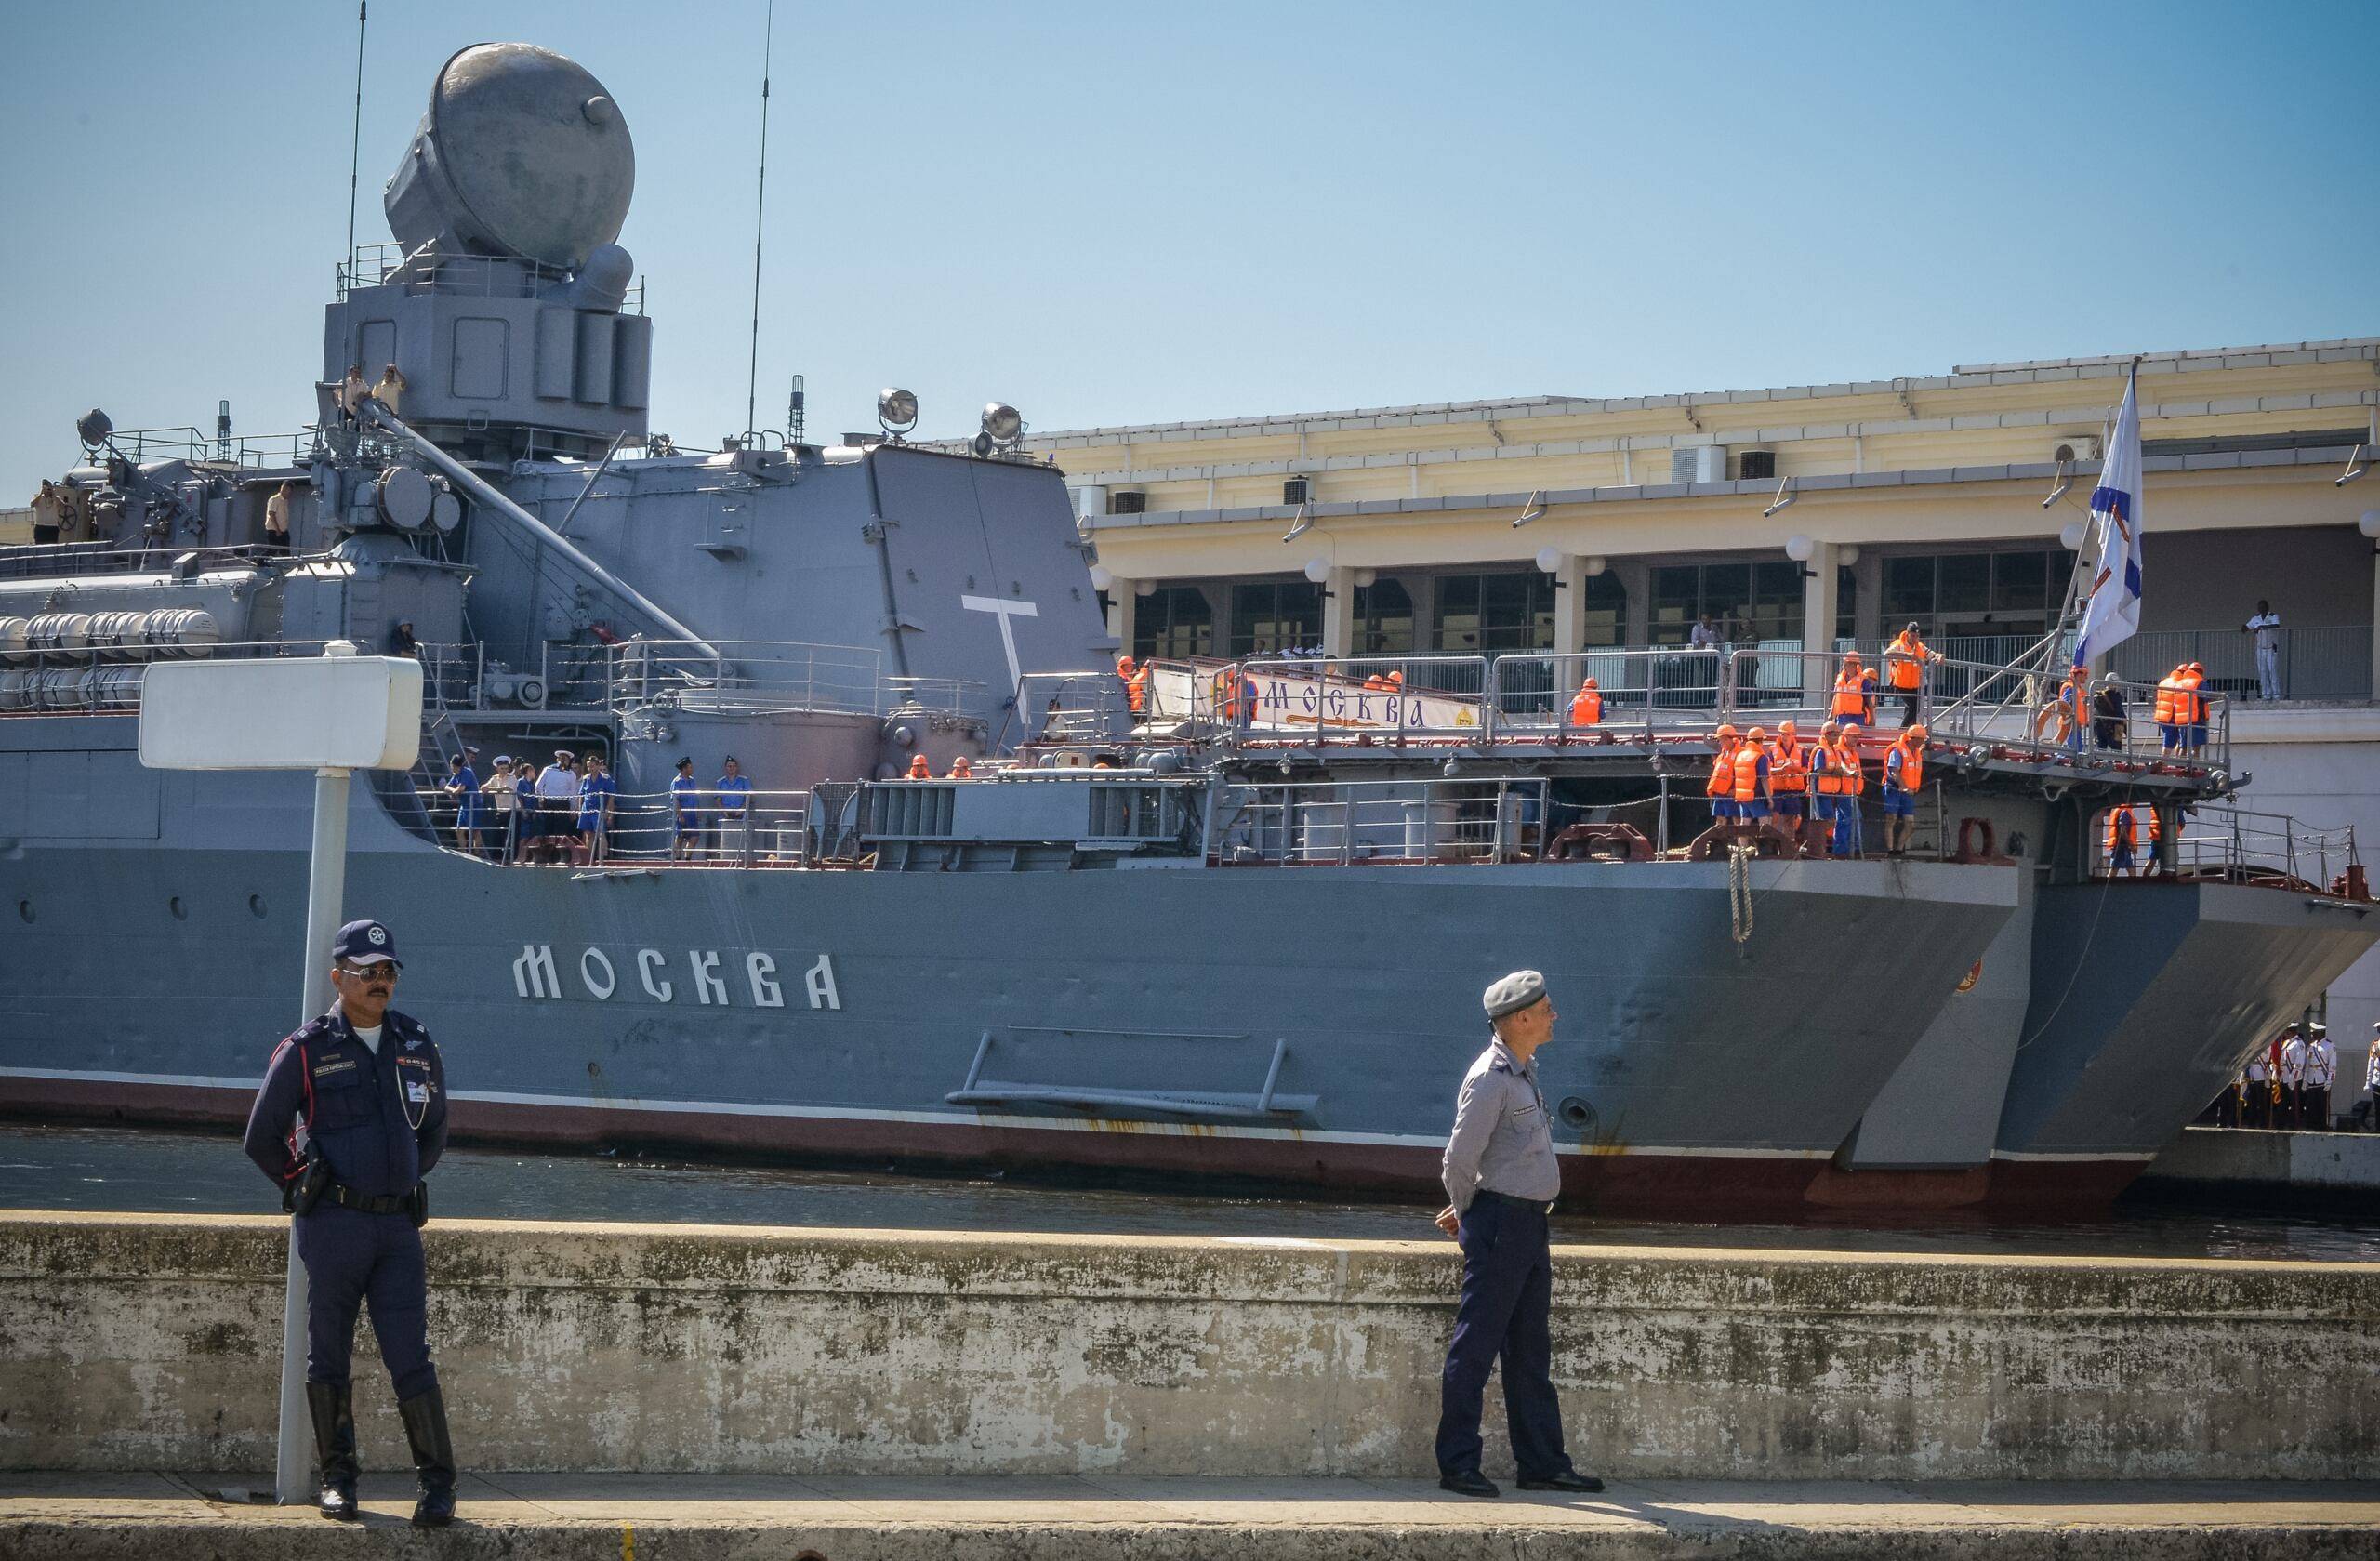 Okret wojenny z rosyjskim napisem "Moskwa"